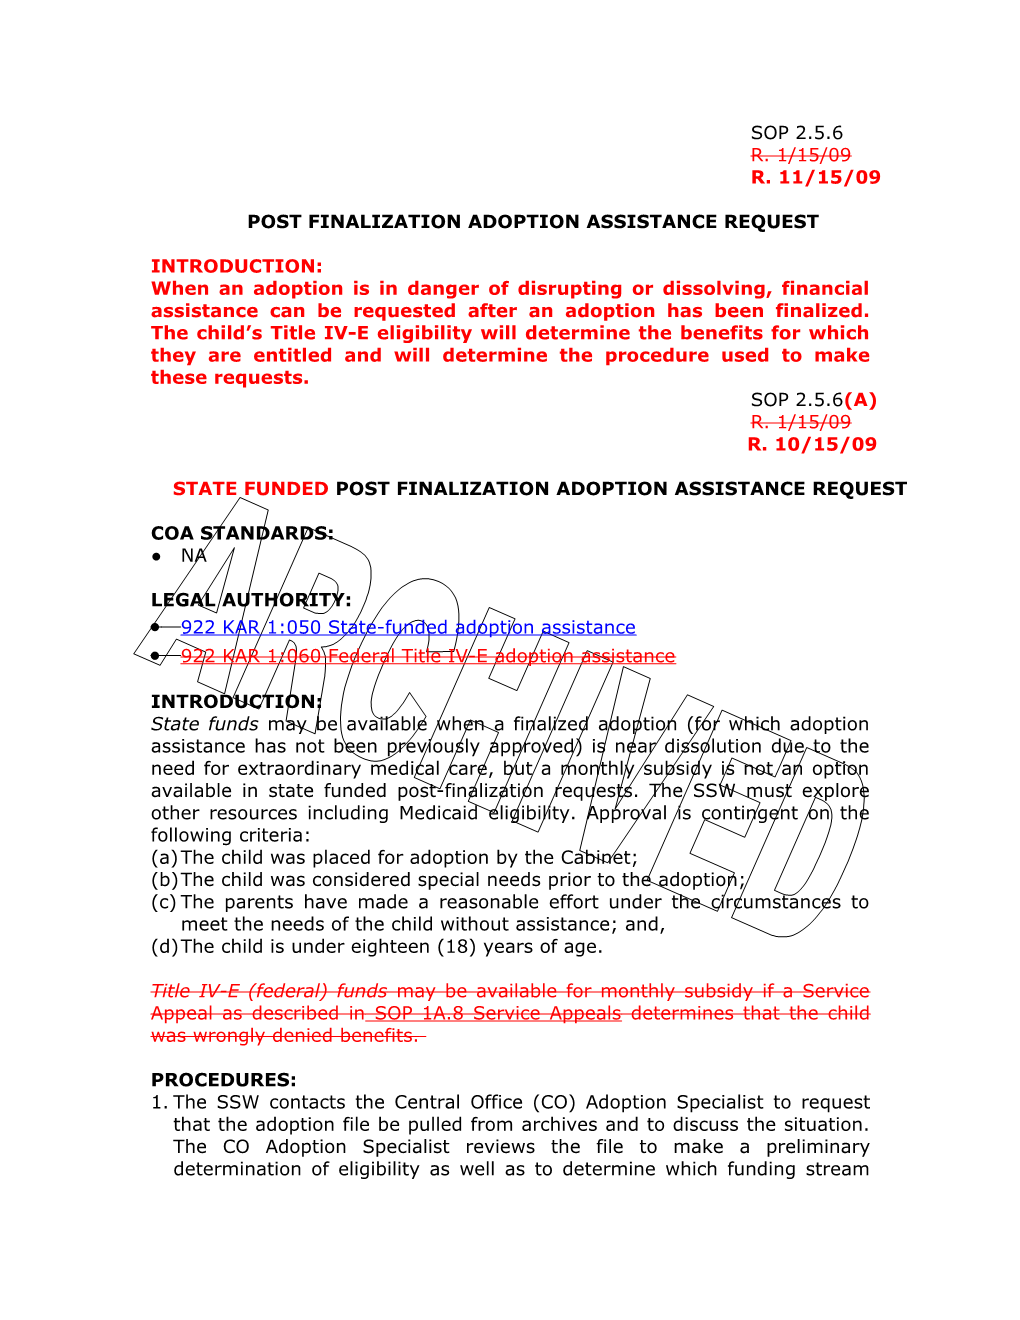 Post Finalization Adoption Assistance Request